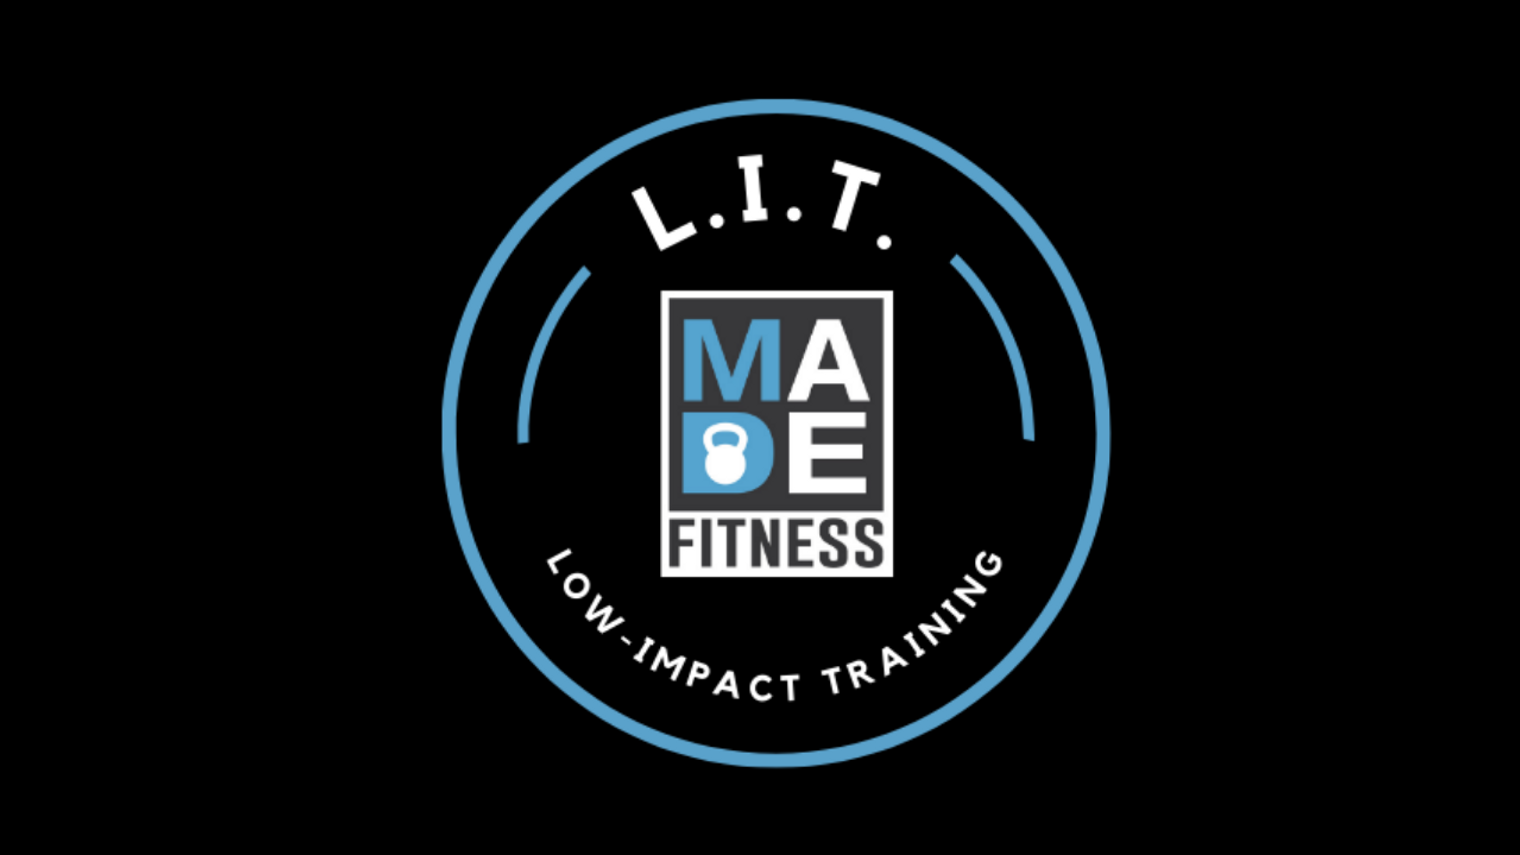 LIT: Low-Impact Training